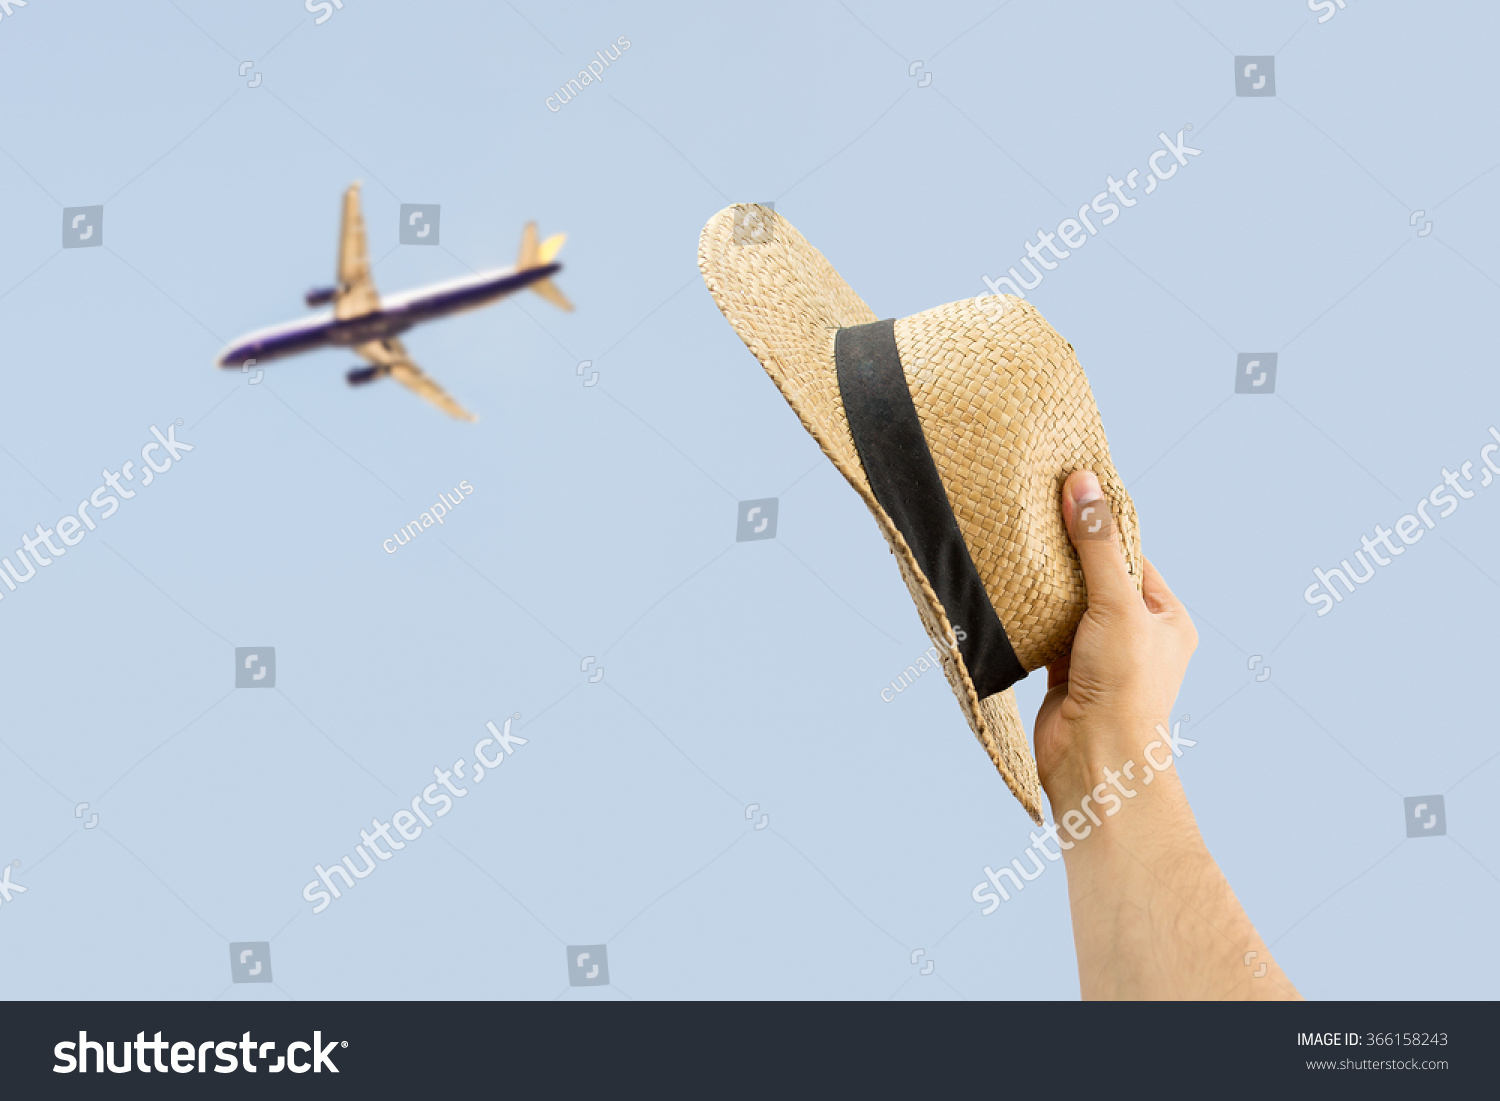 Plane bye Images, Stock Photos & Vectors | Shutterstock